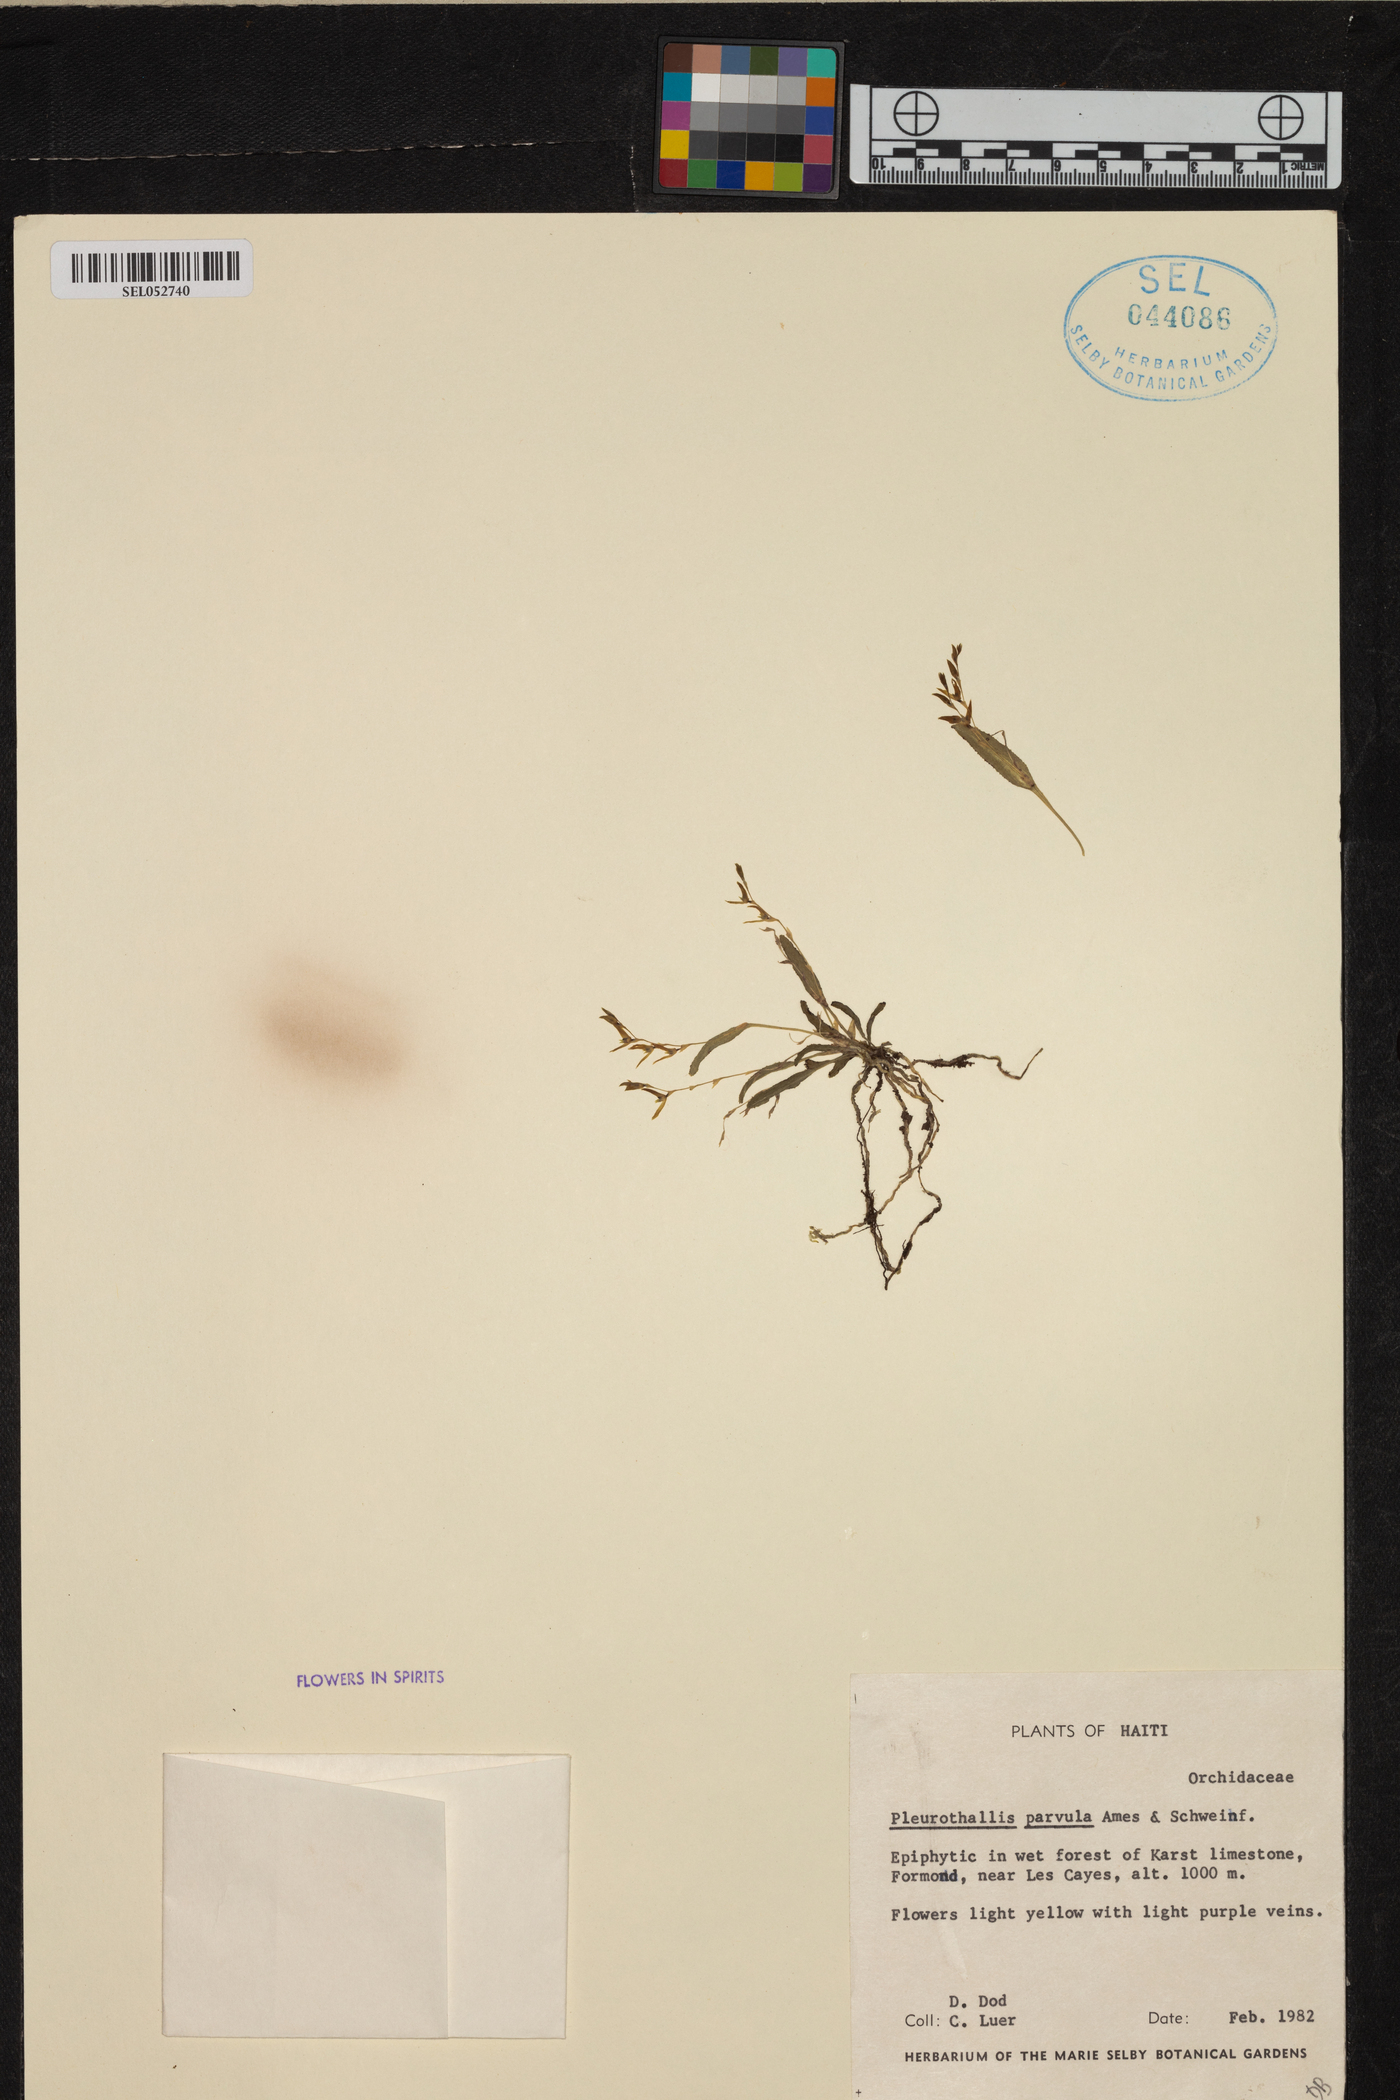 Acianthera parvula image